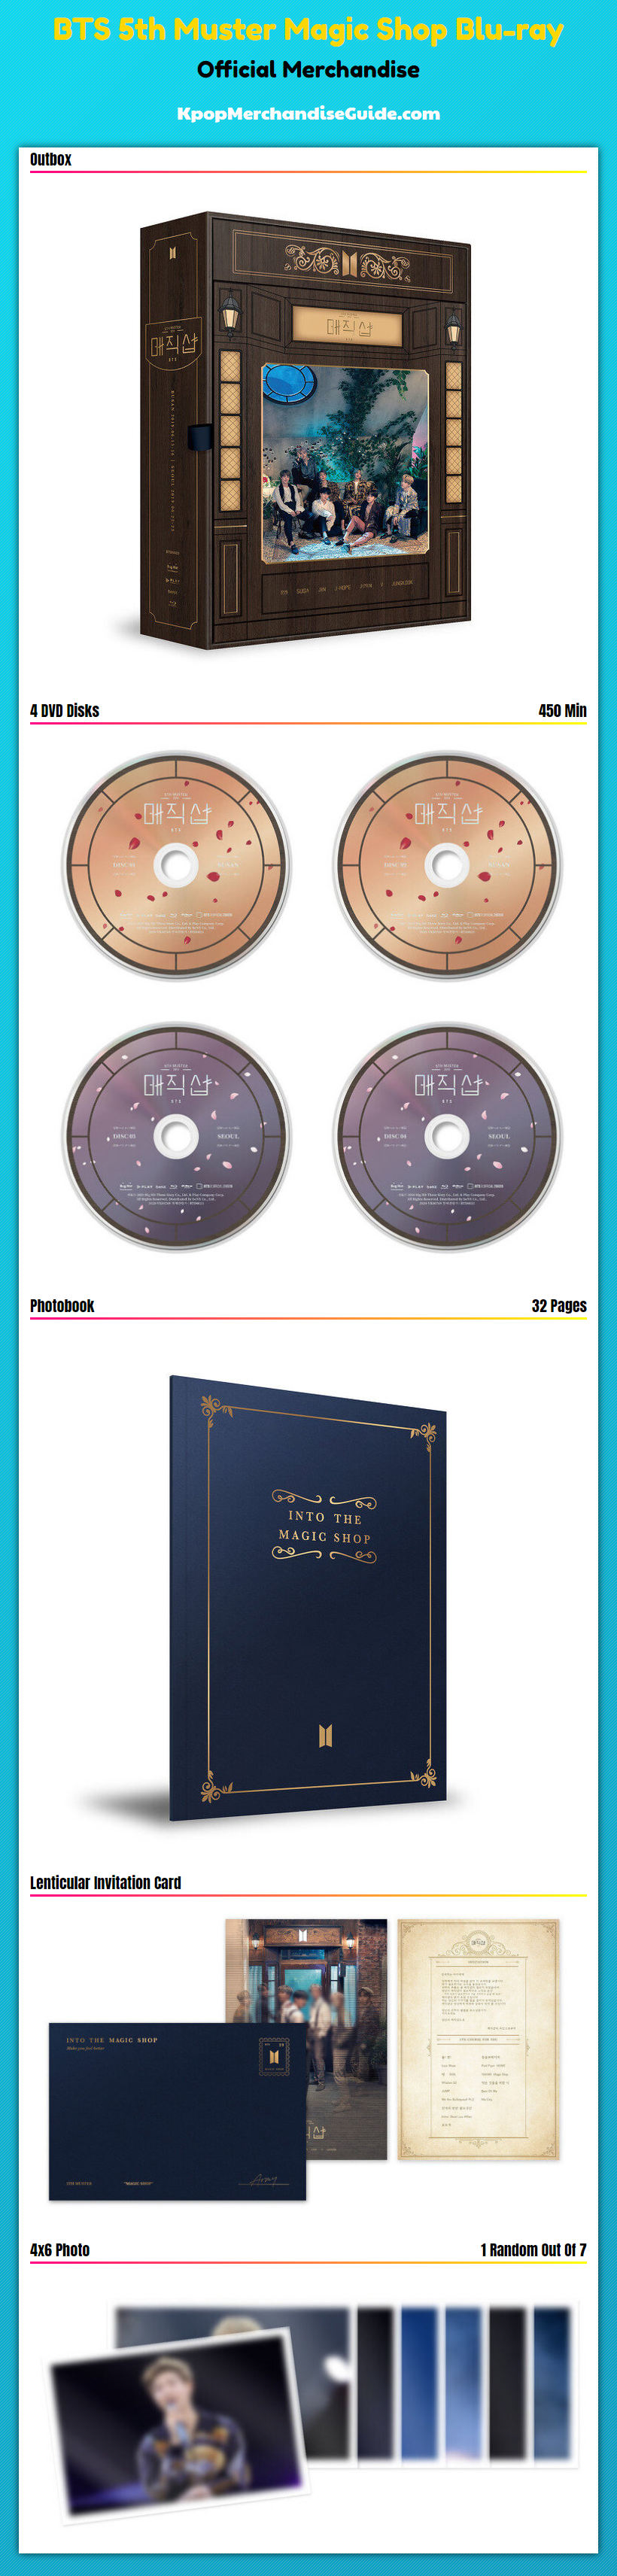 BTS 5th Muster Magic Shop Blu-ray